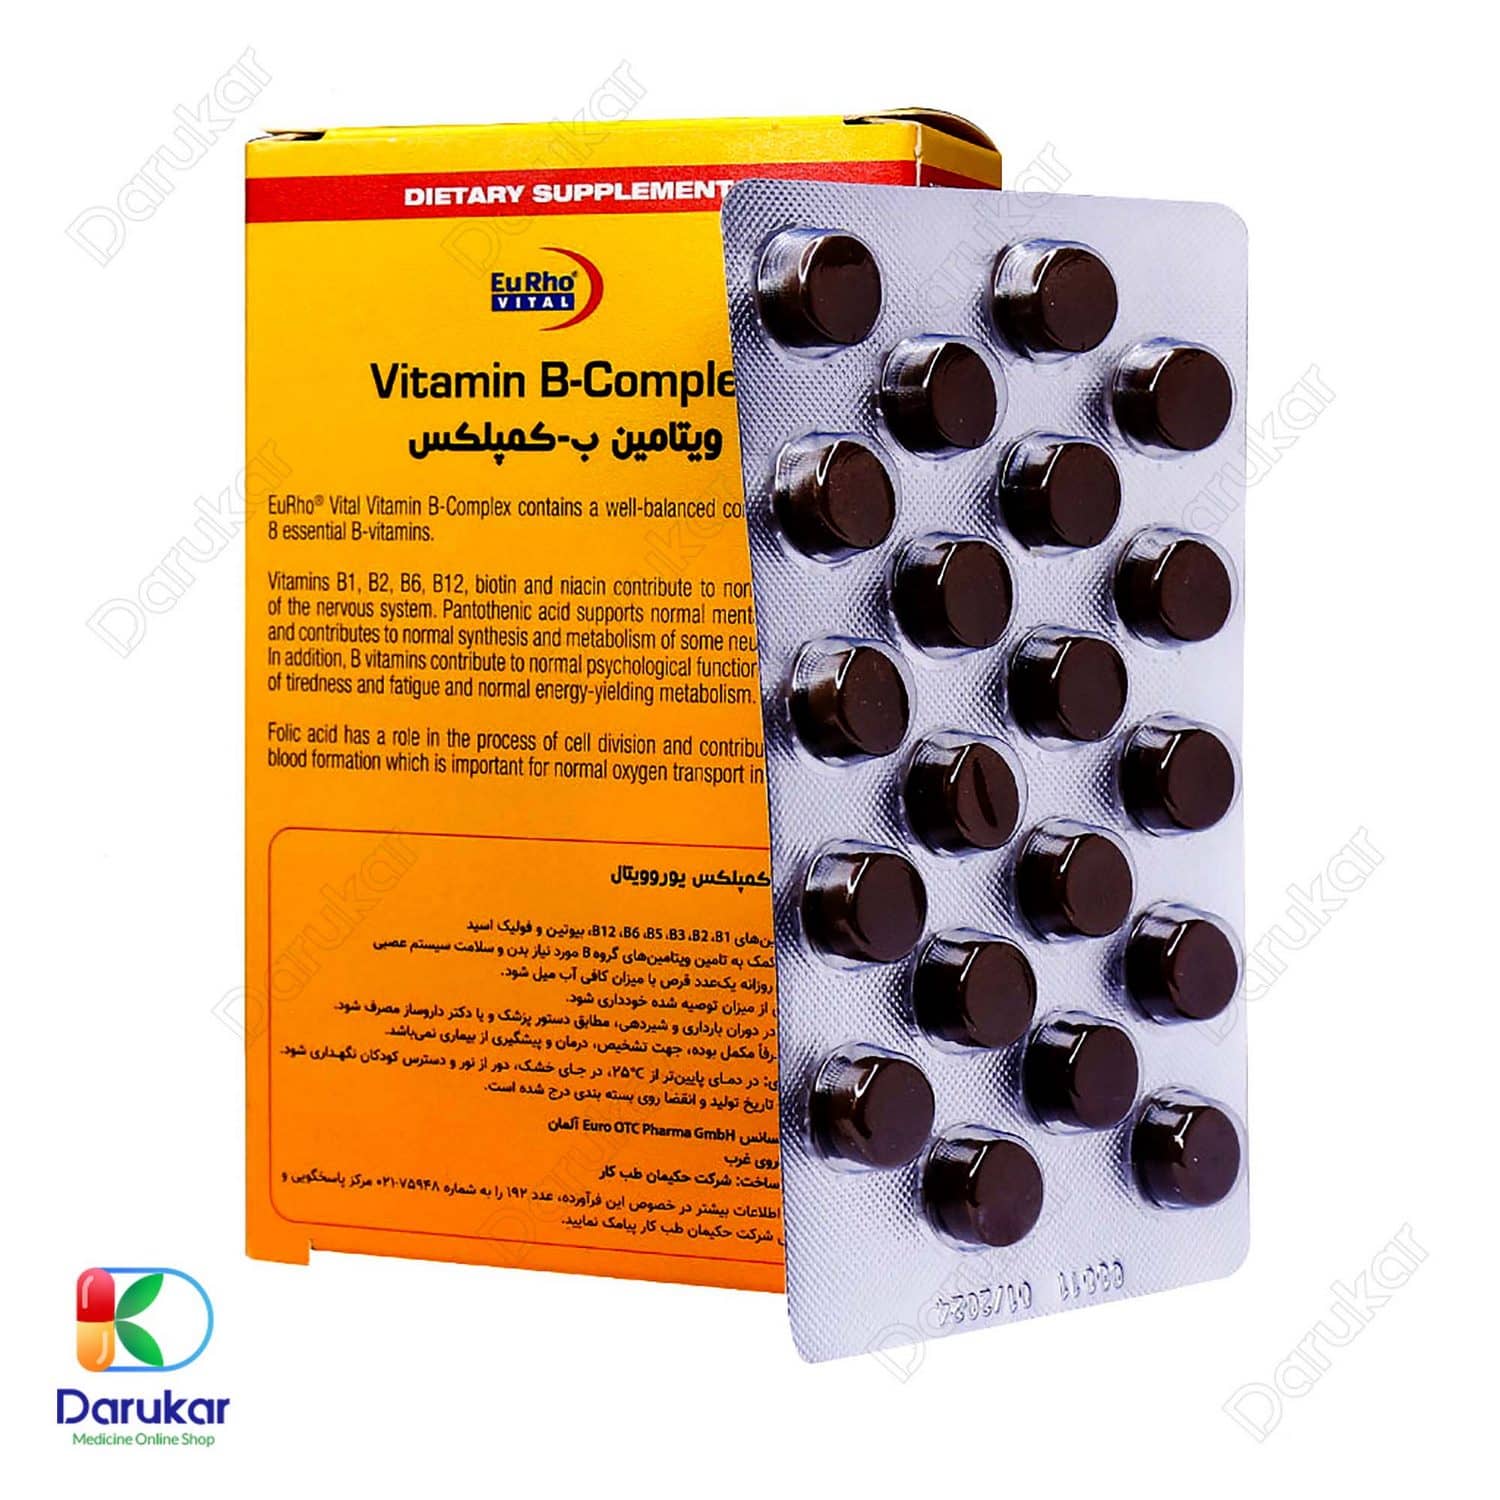 EuRho Vital Vitamin B Complex 60 Caps Image Gallery2